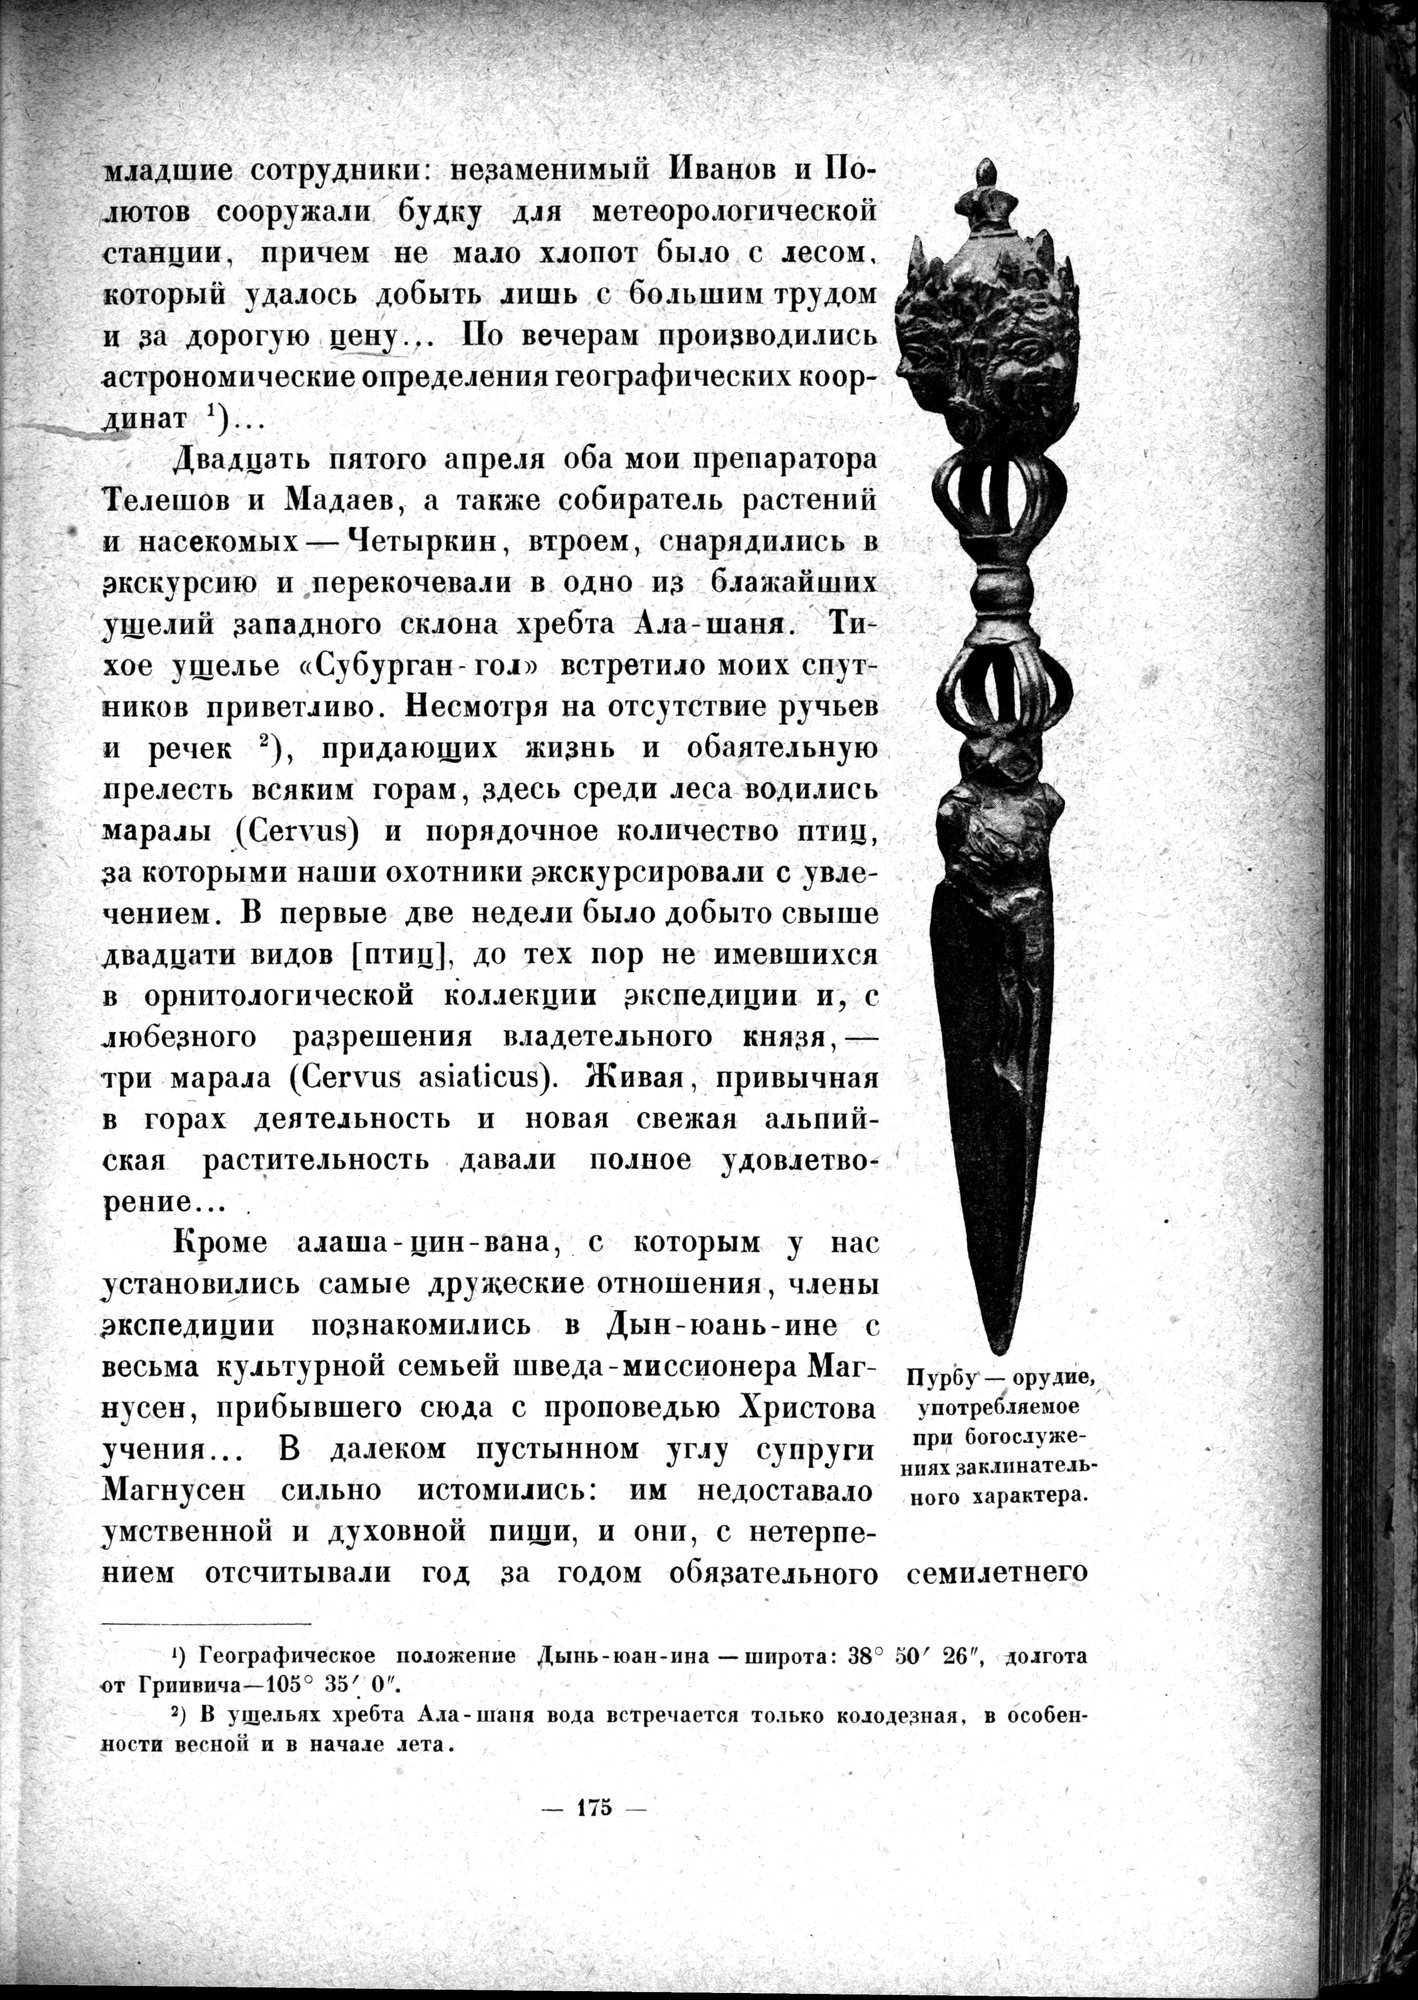 Mongoliya i Amdo i mertby gorod Khara-Khoto : vol.1 / Page 209 (Grayscale High Resolution Image)